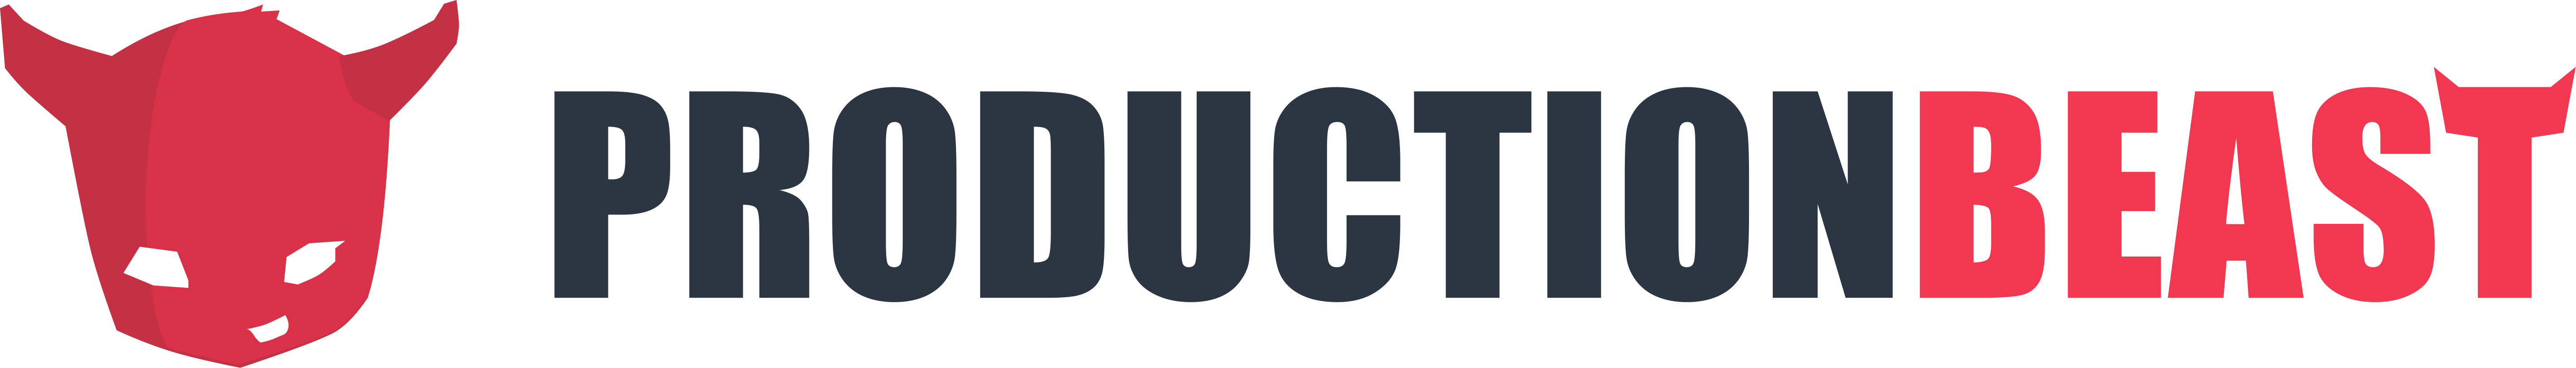 ProductionBeast Logo